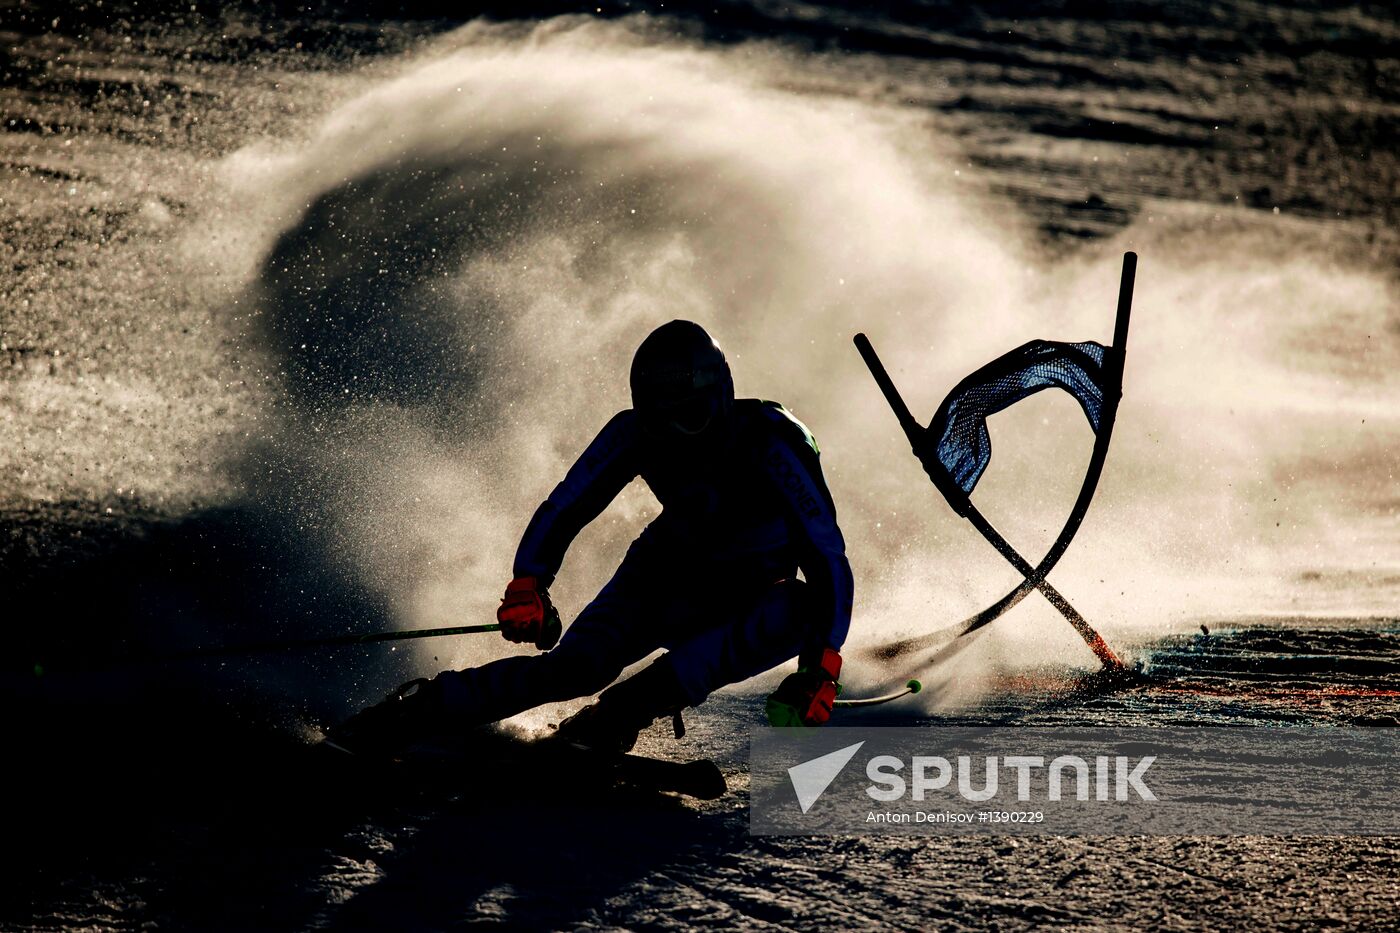 Alpine Skiing World Championships. Men's Giant Slalom